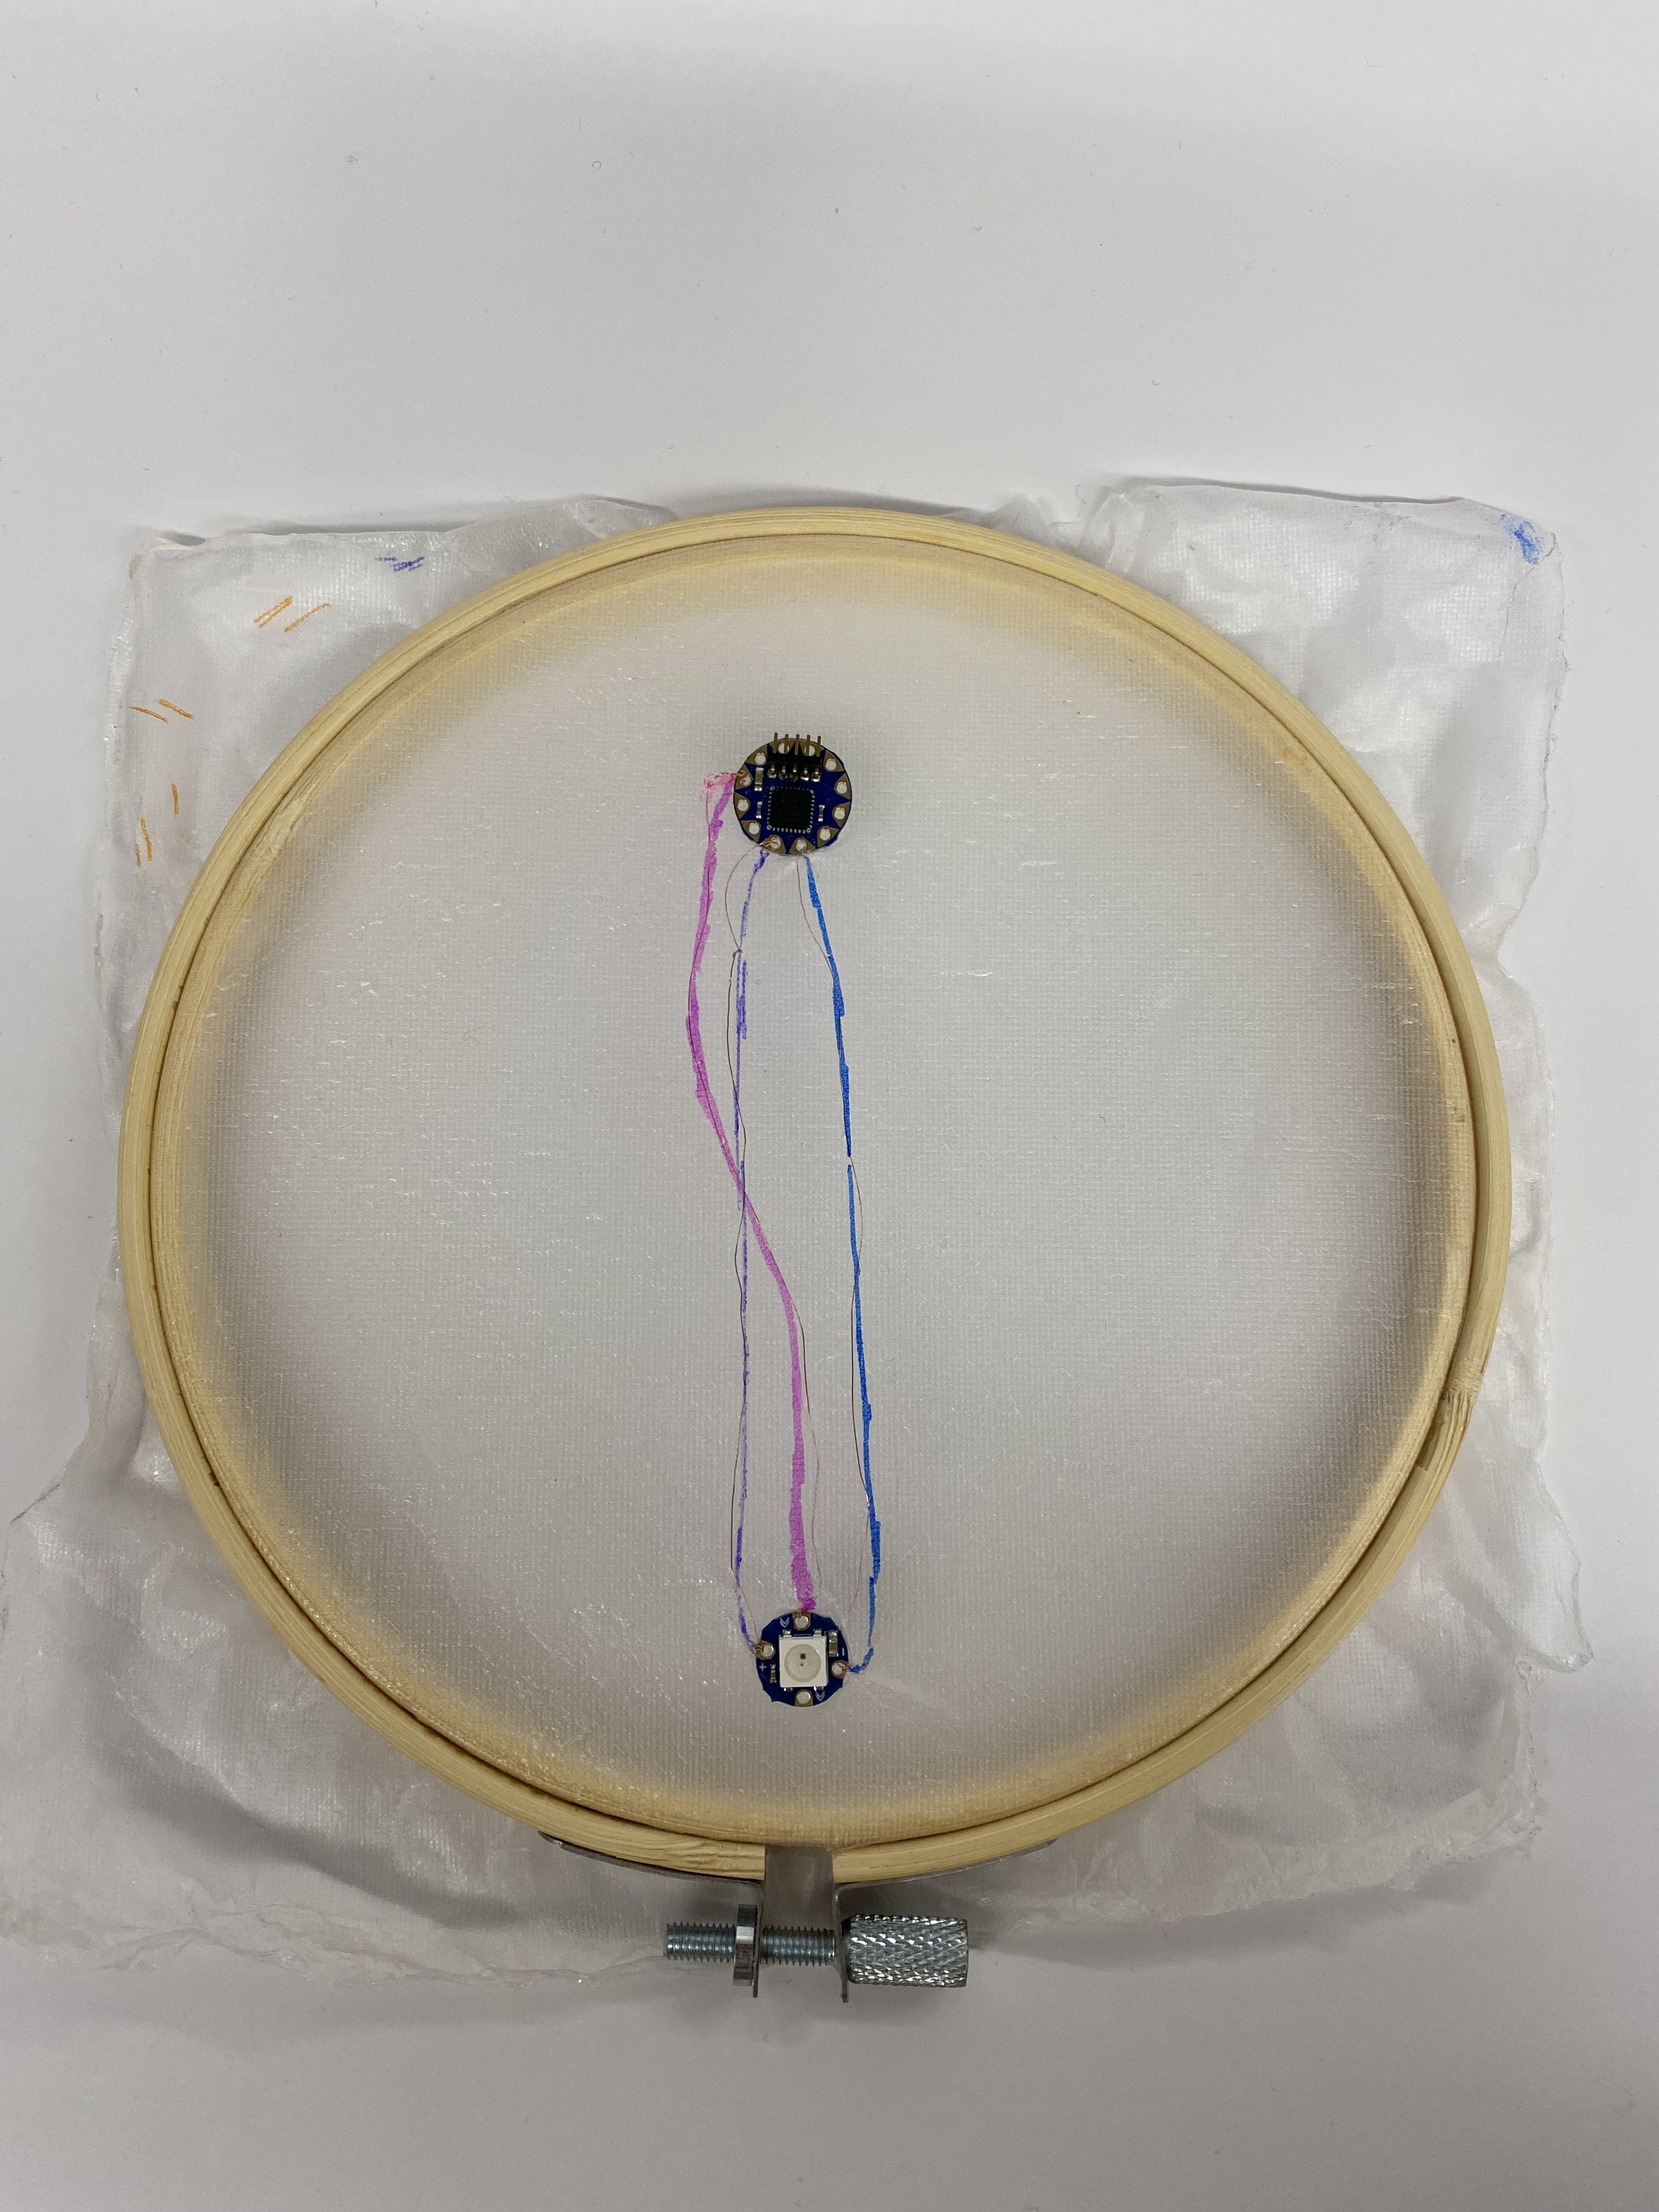 Sew Conductive thread